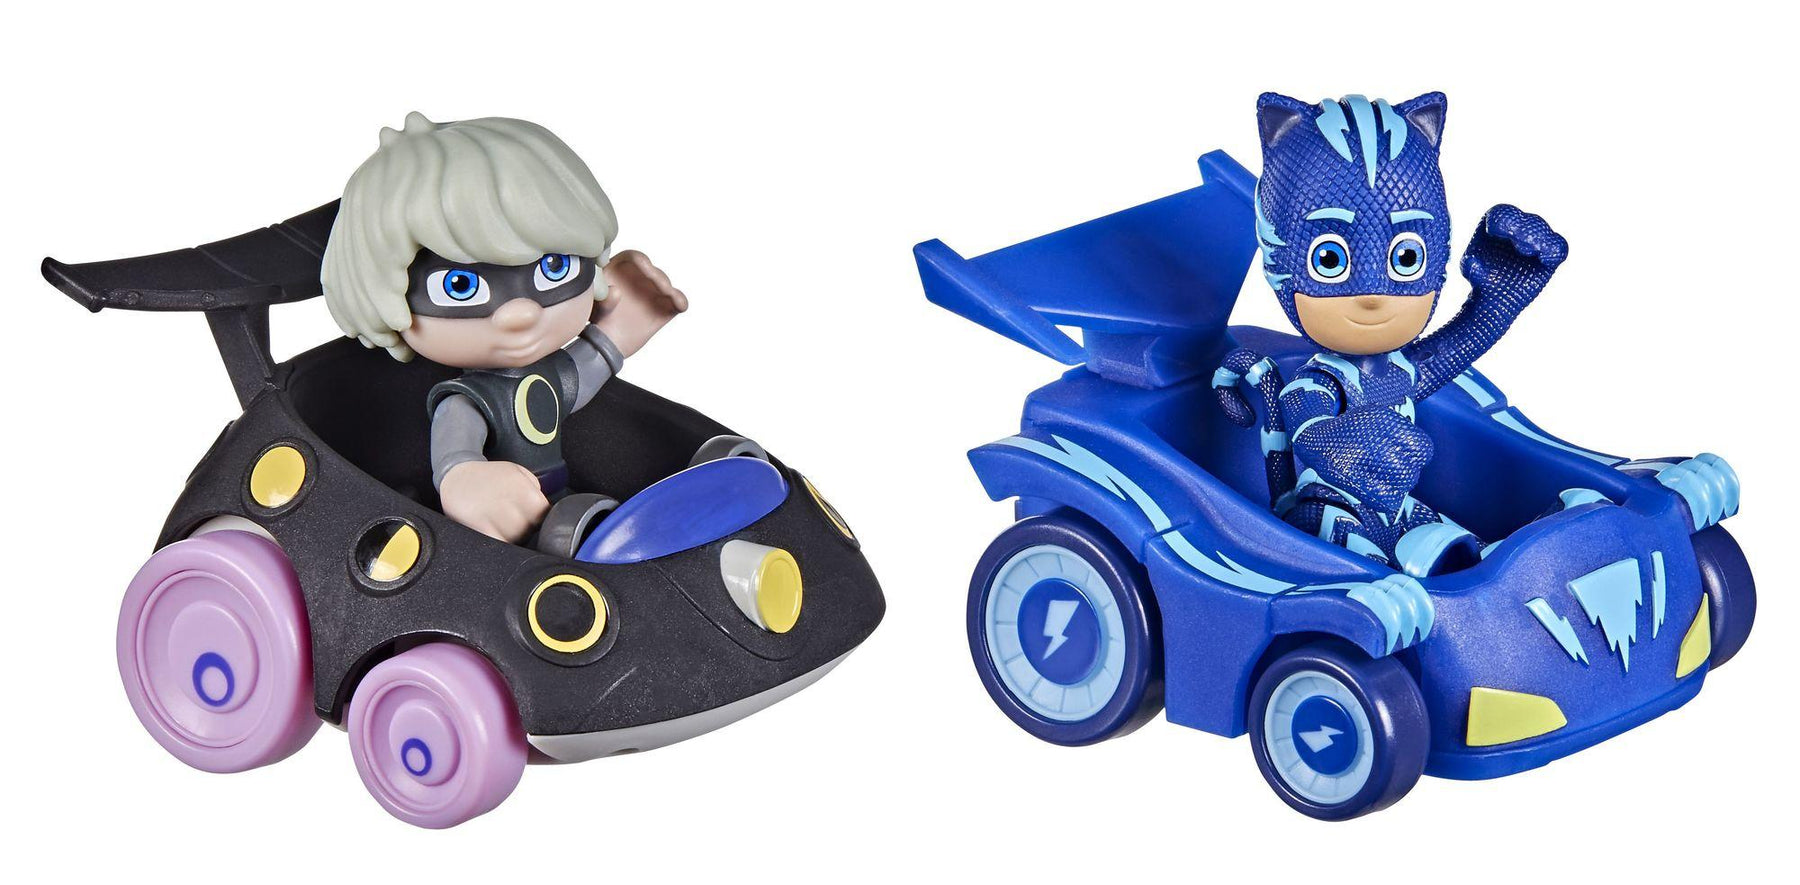 PJ Masks Hero VS Villain, Catboy VS Lunagirl Hahmot sekä Ajoneuvot